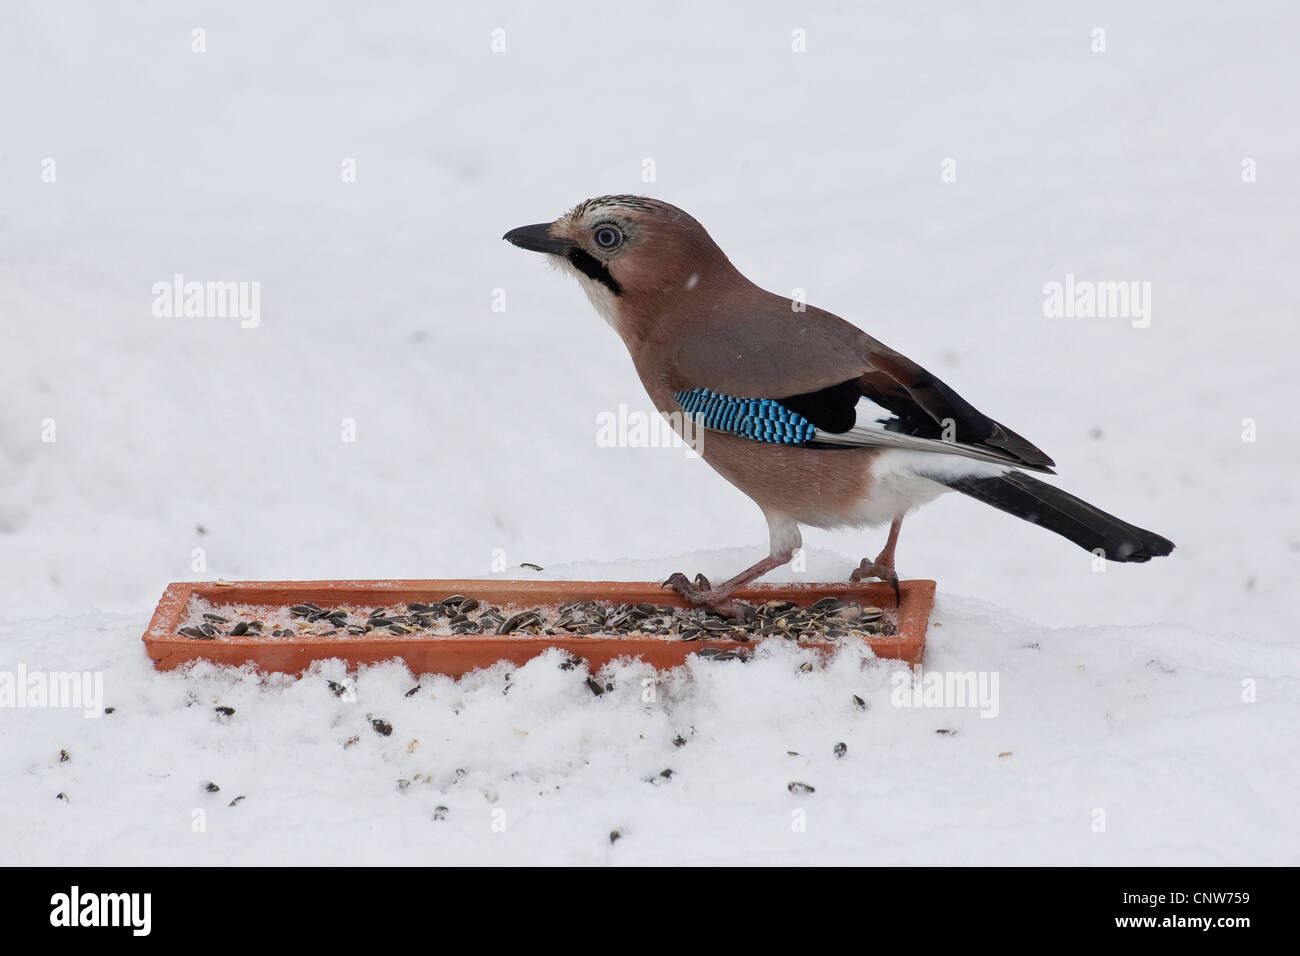 jay (Garrulus glandarius), feeding on grains from snow, Germany Stock Photo